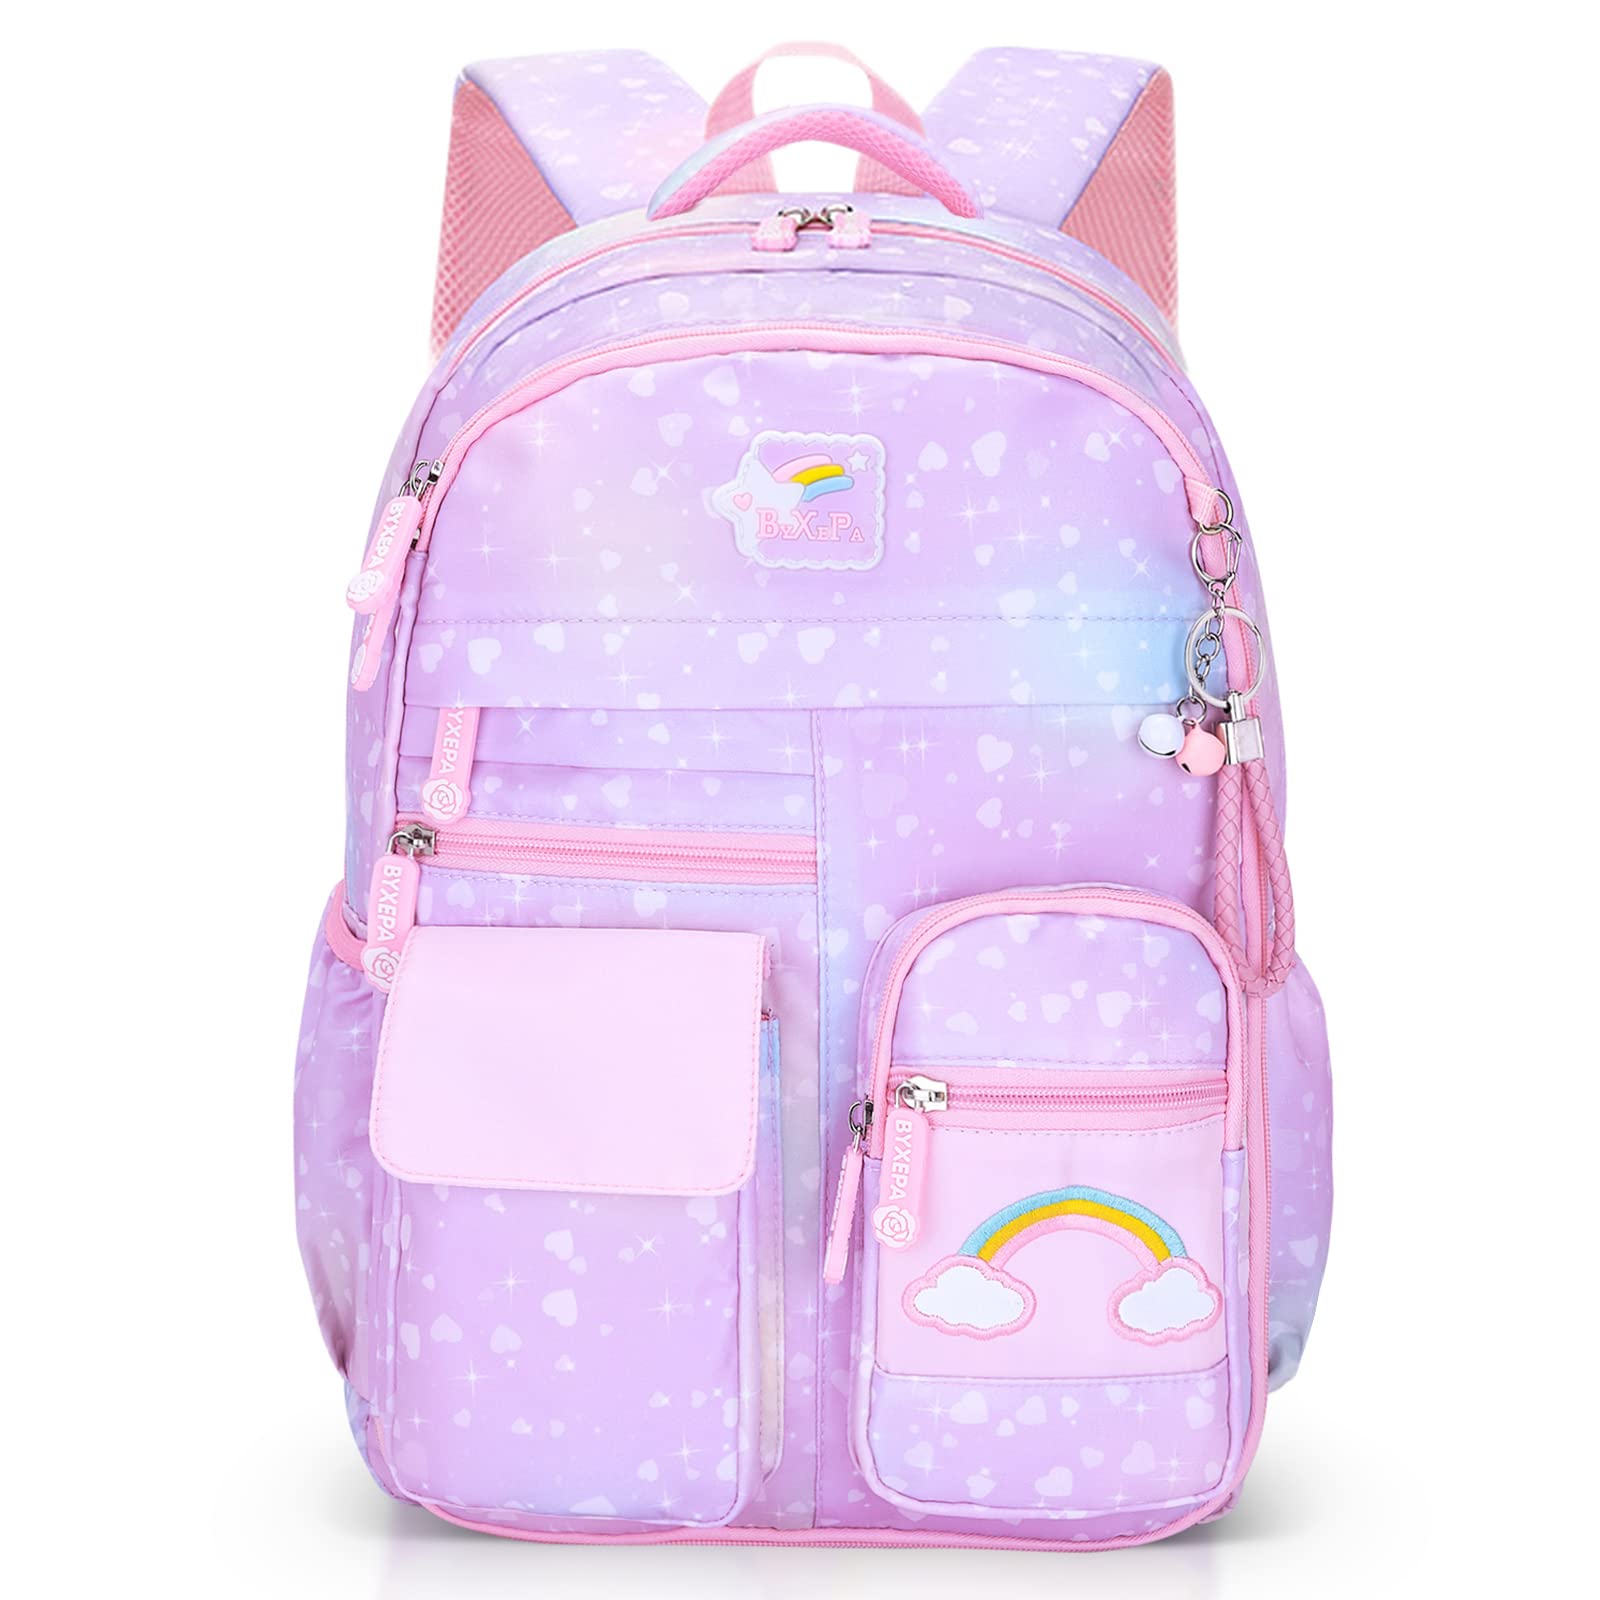 BYXEPA Girls Backpack, School Kids Backpacks for Girls, Cute Book